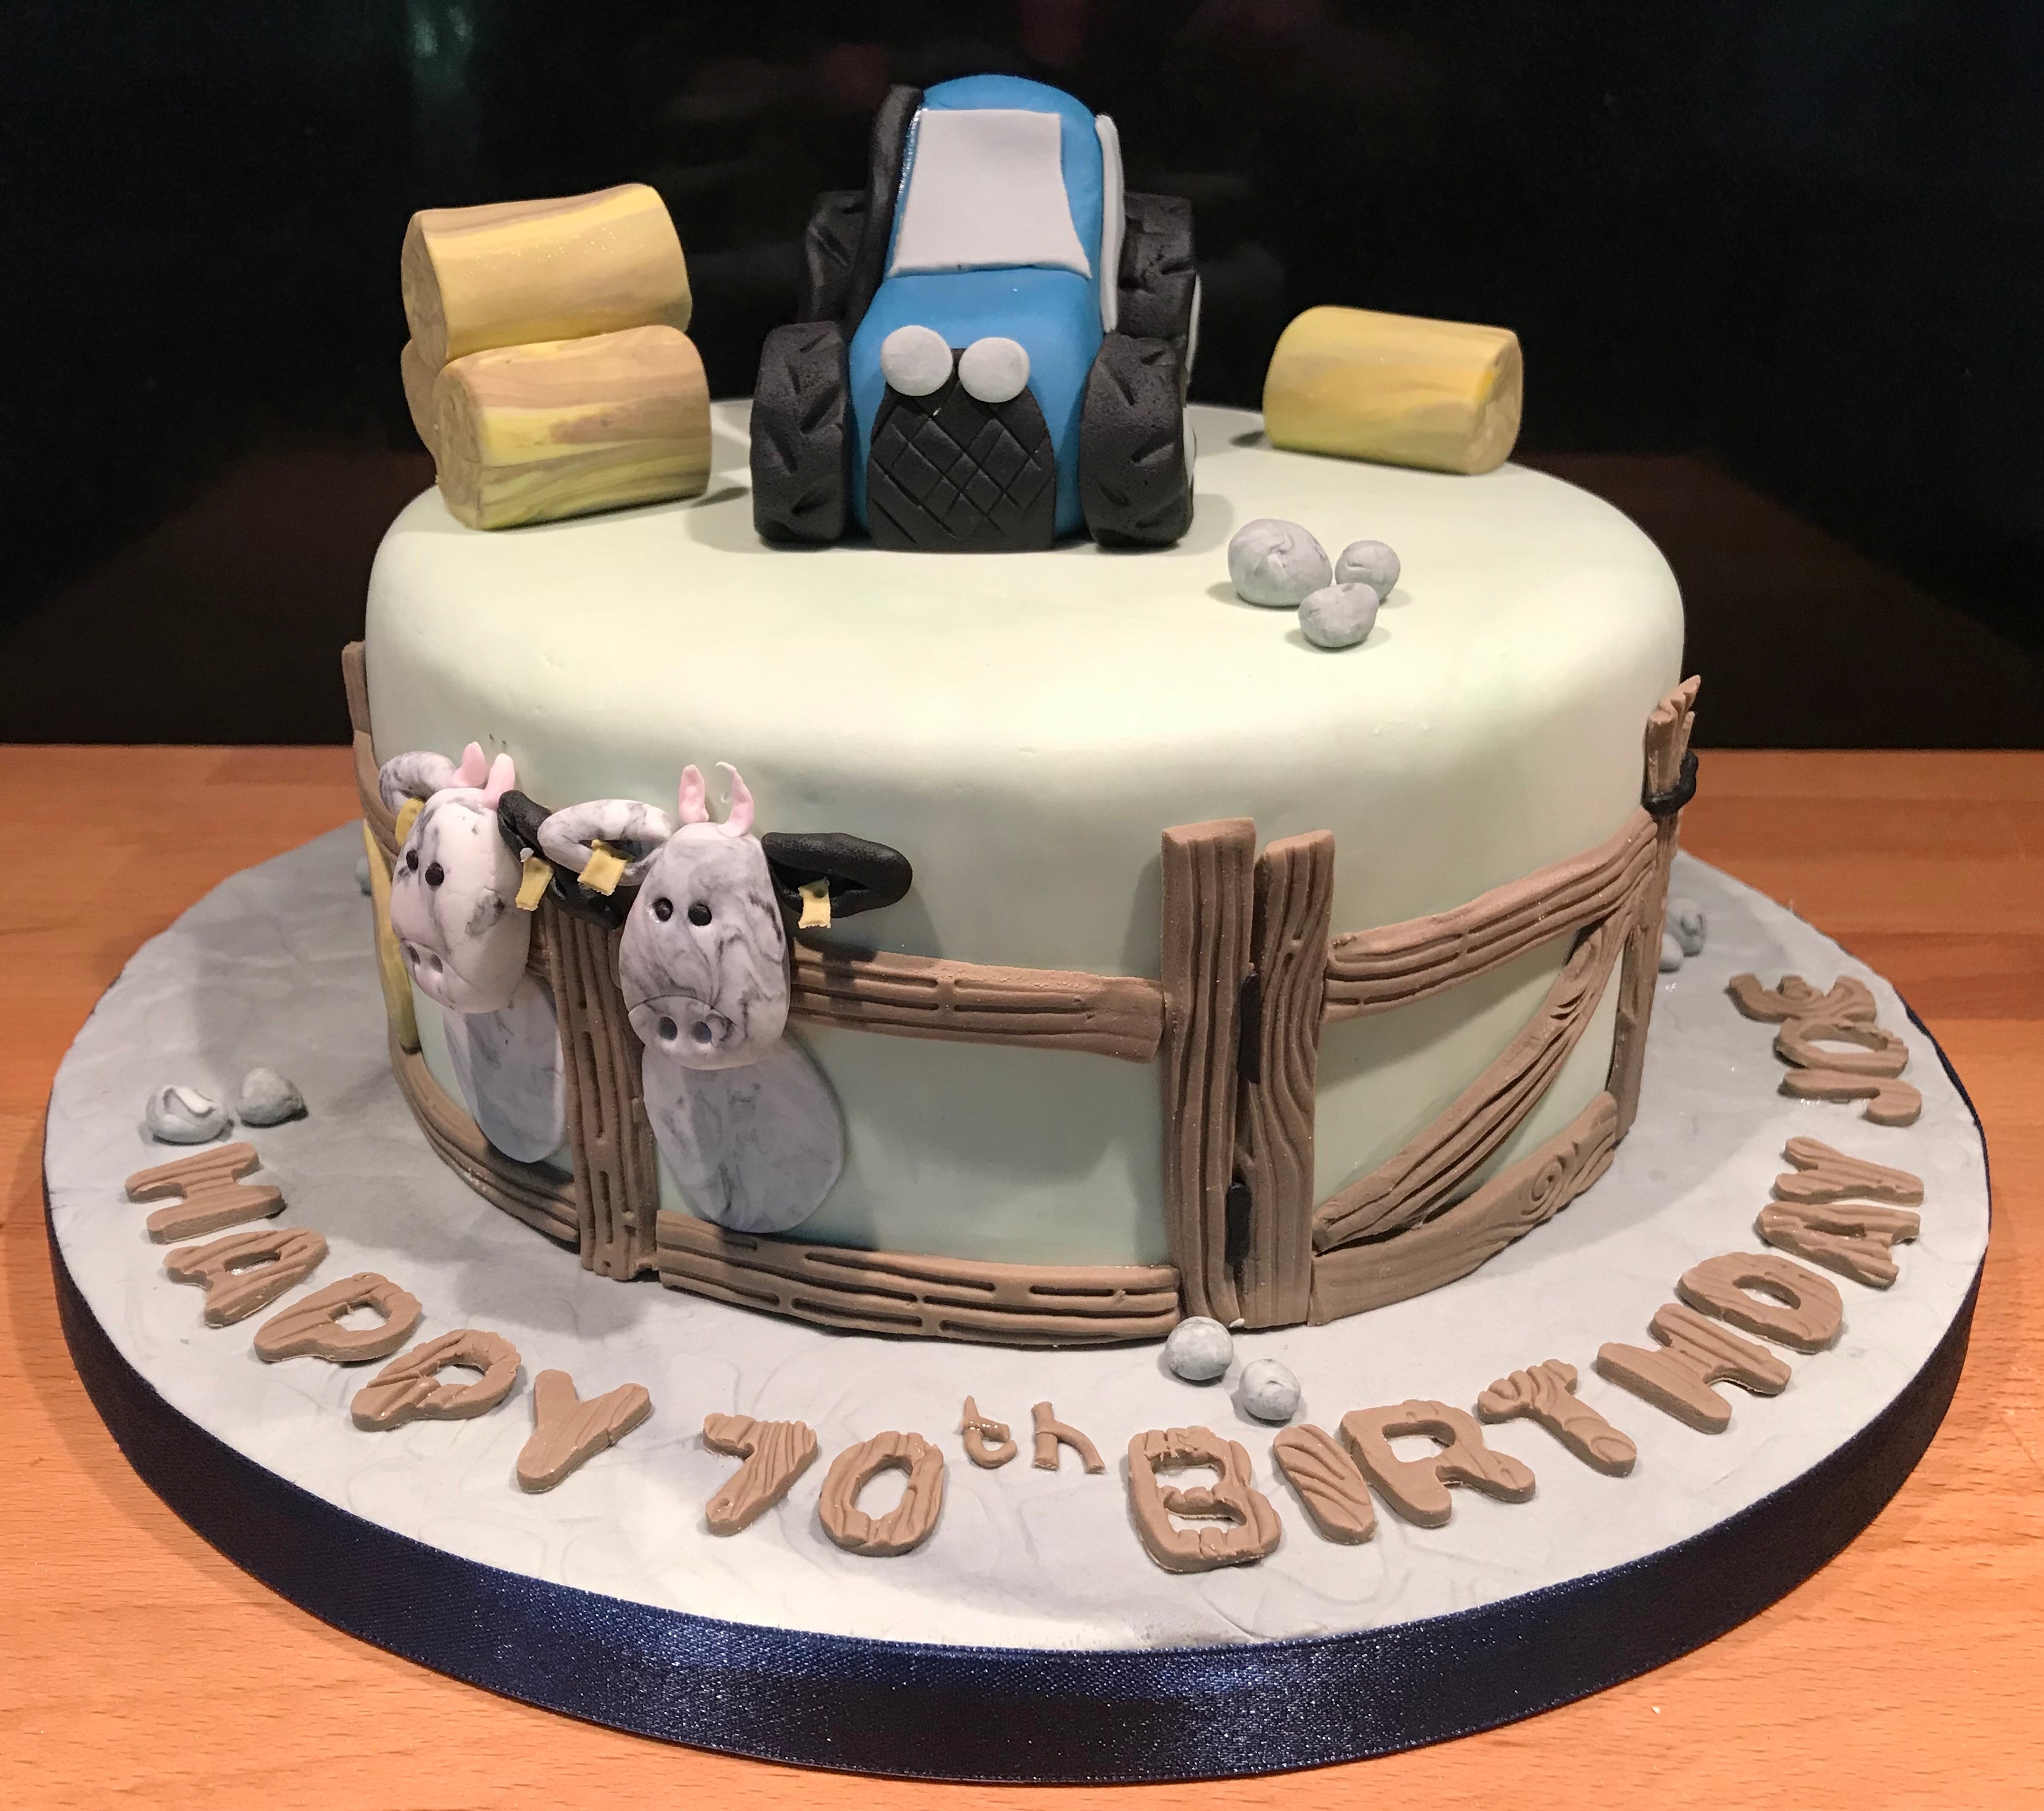 Tractor Cake Tutorial | Children's Birthday Cake Ideas - YouTube